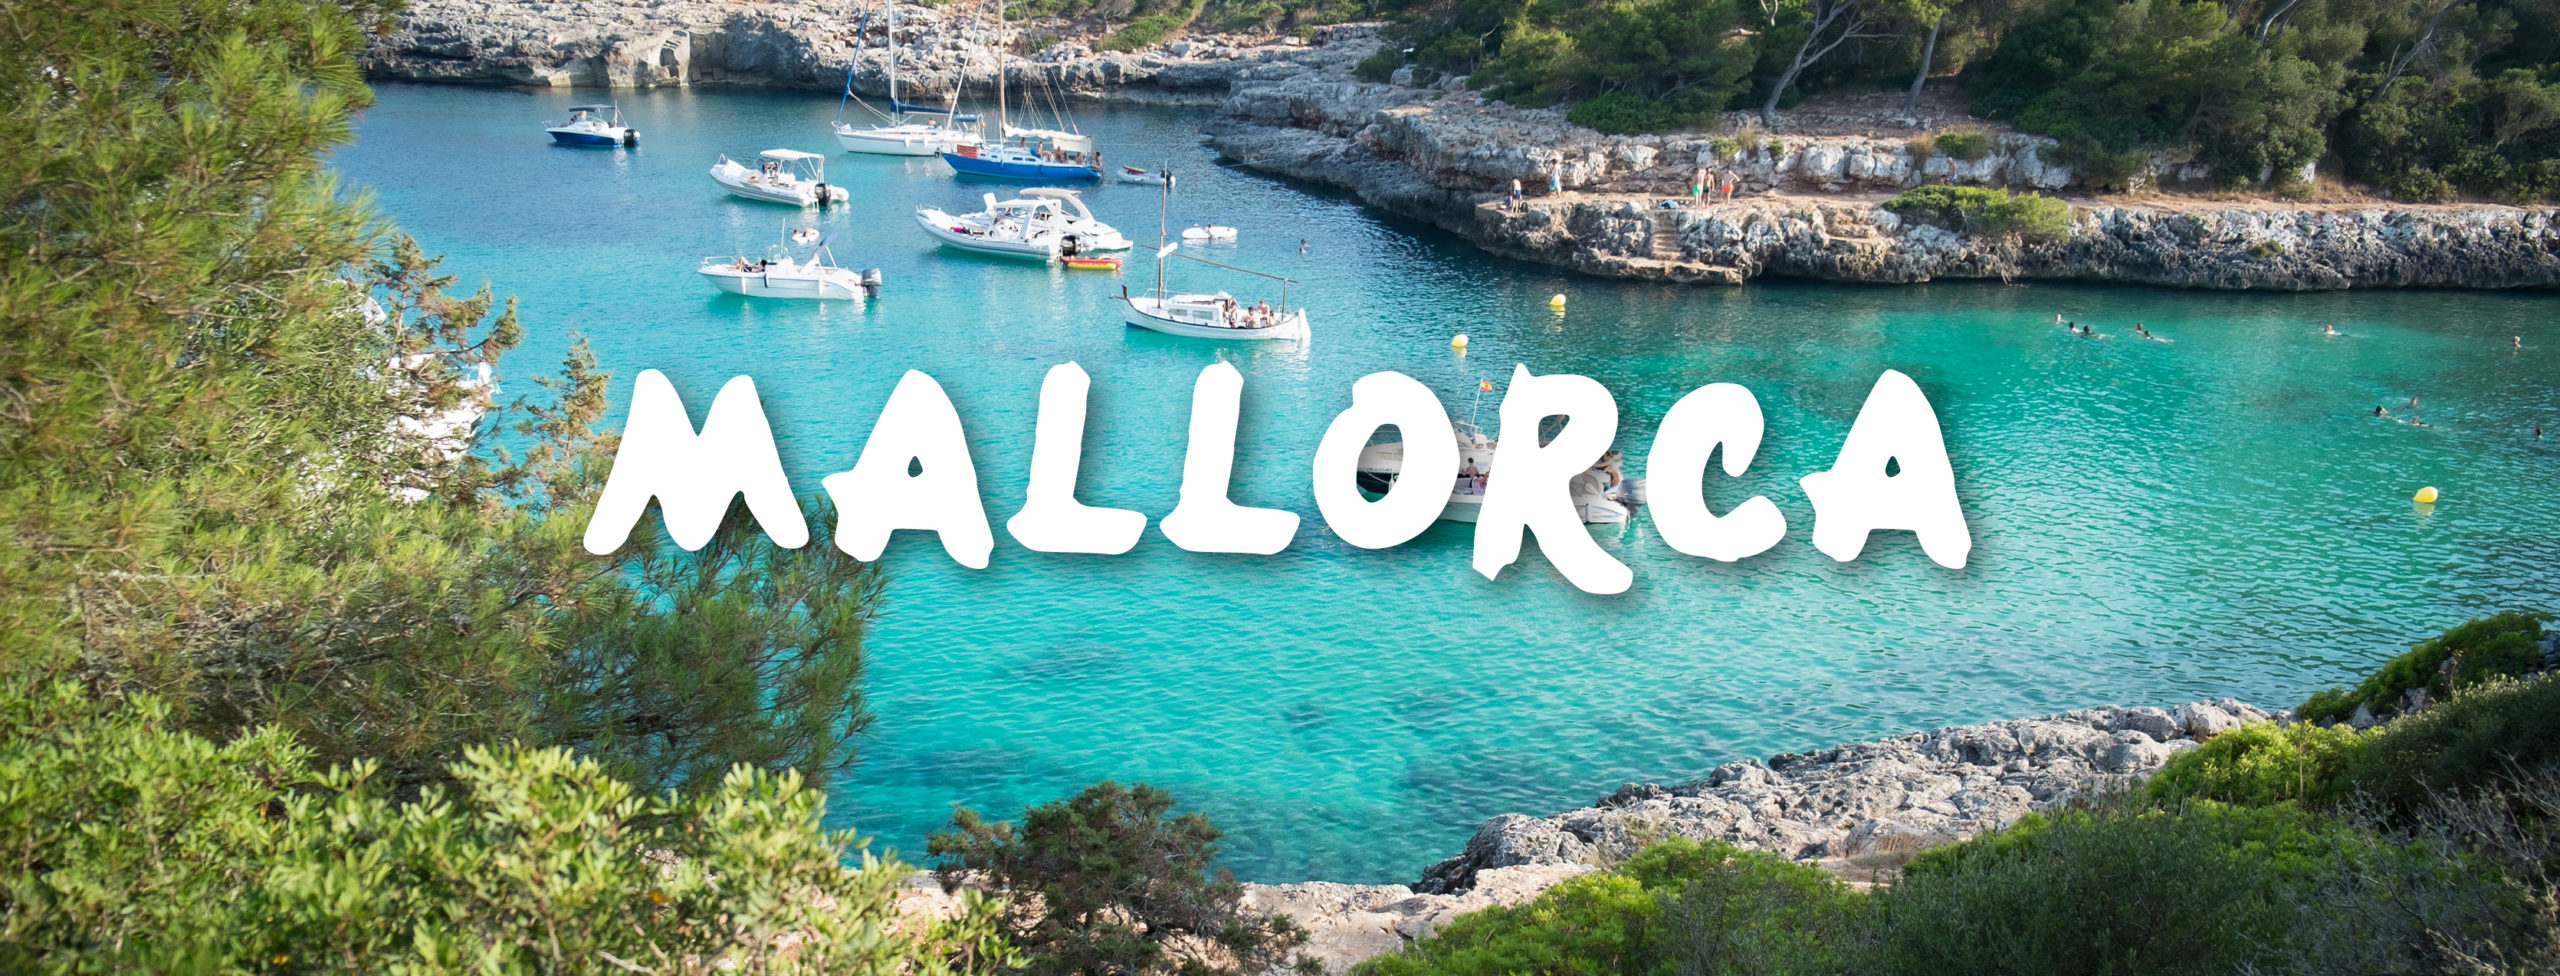 Mallorca Urlaub buchen Reisebüro Rosenheim Wagner Reisen Raubling